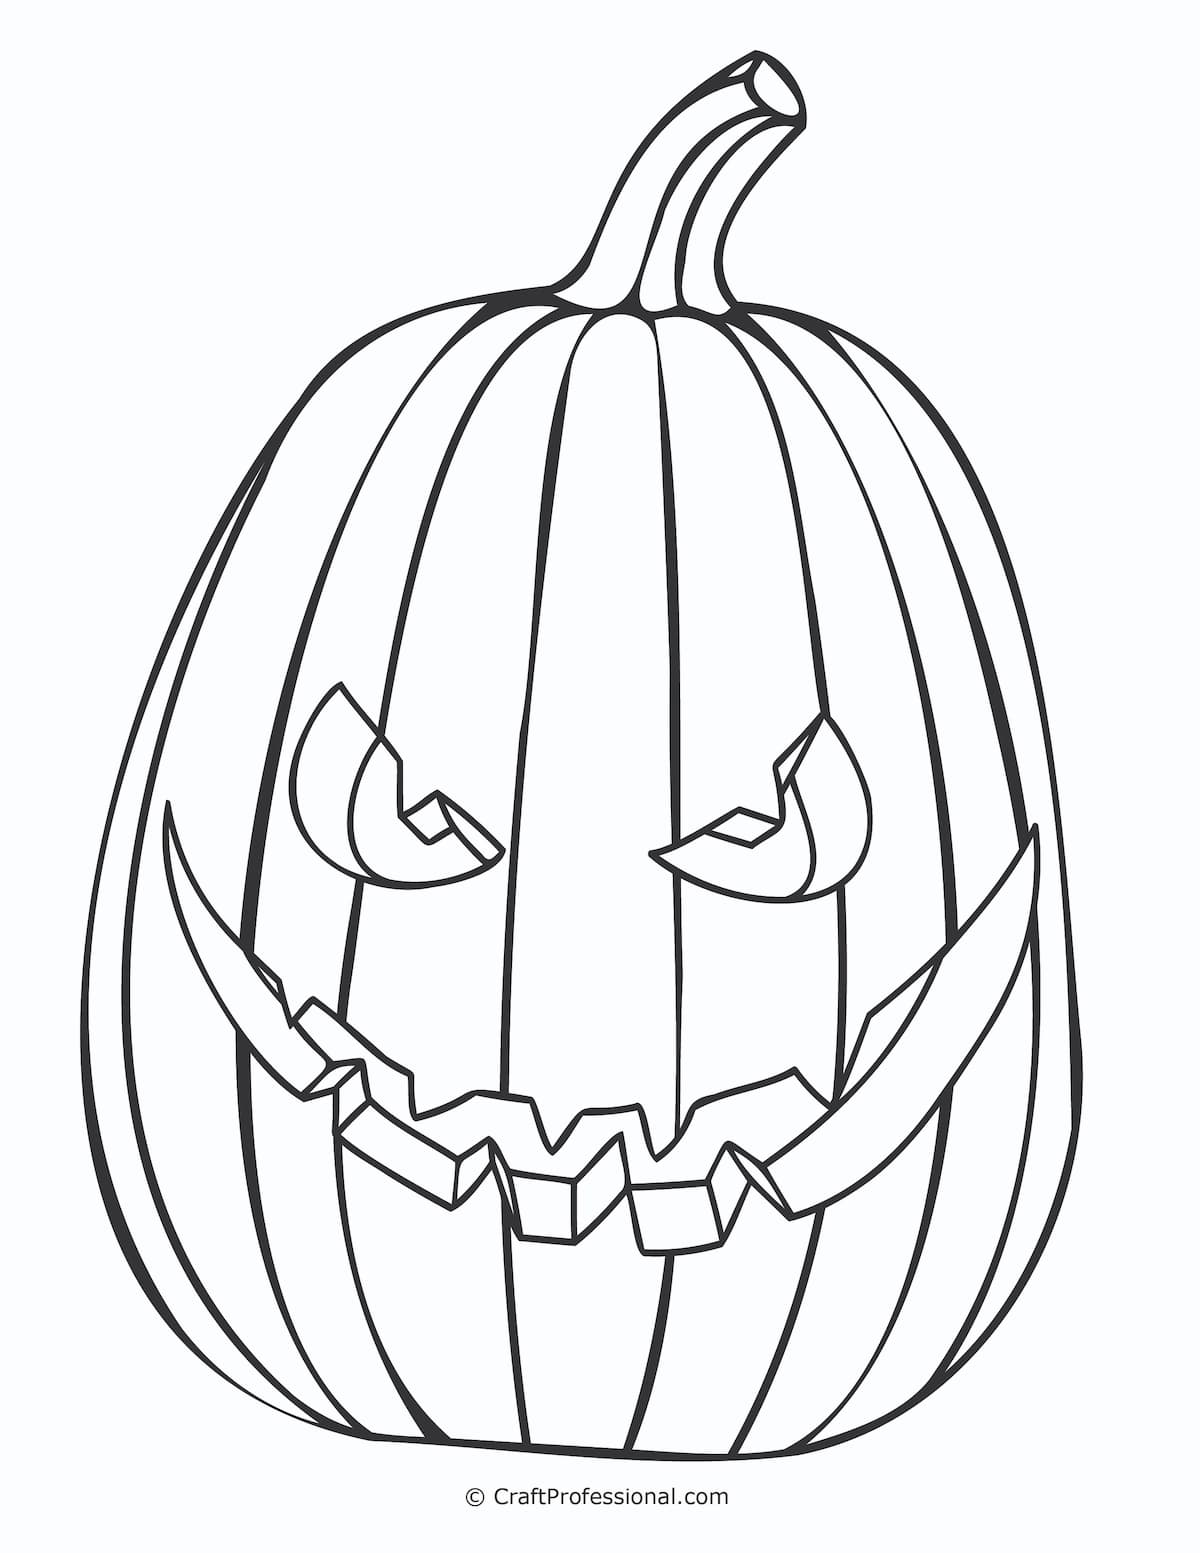 Pumpkin Kids Coloring Pages Halloween / Top 10 Free Printable Halloween